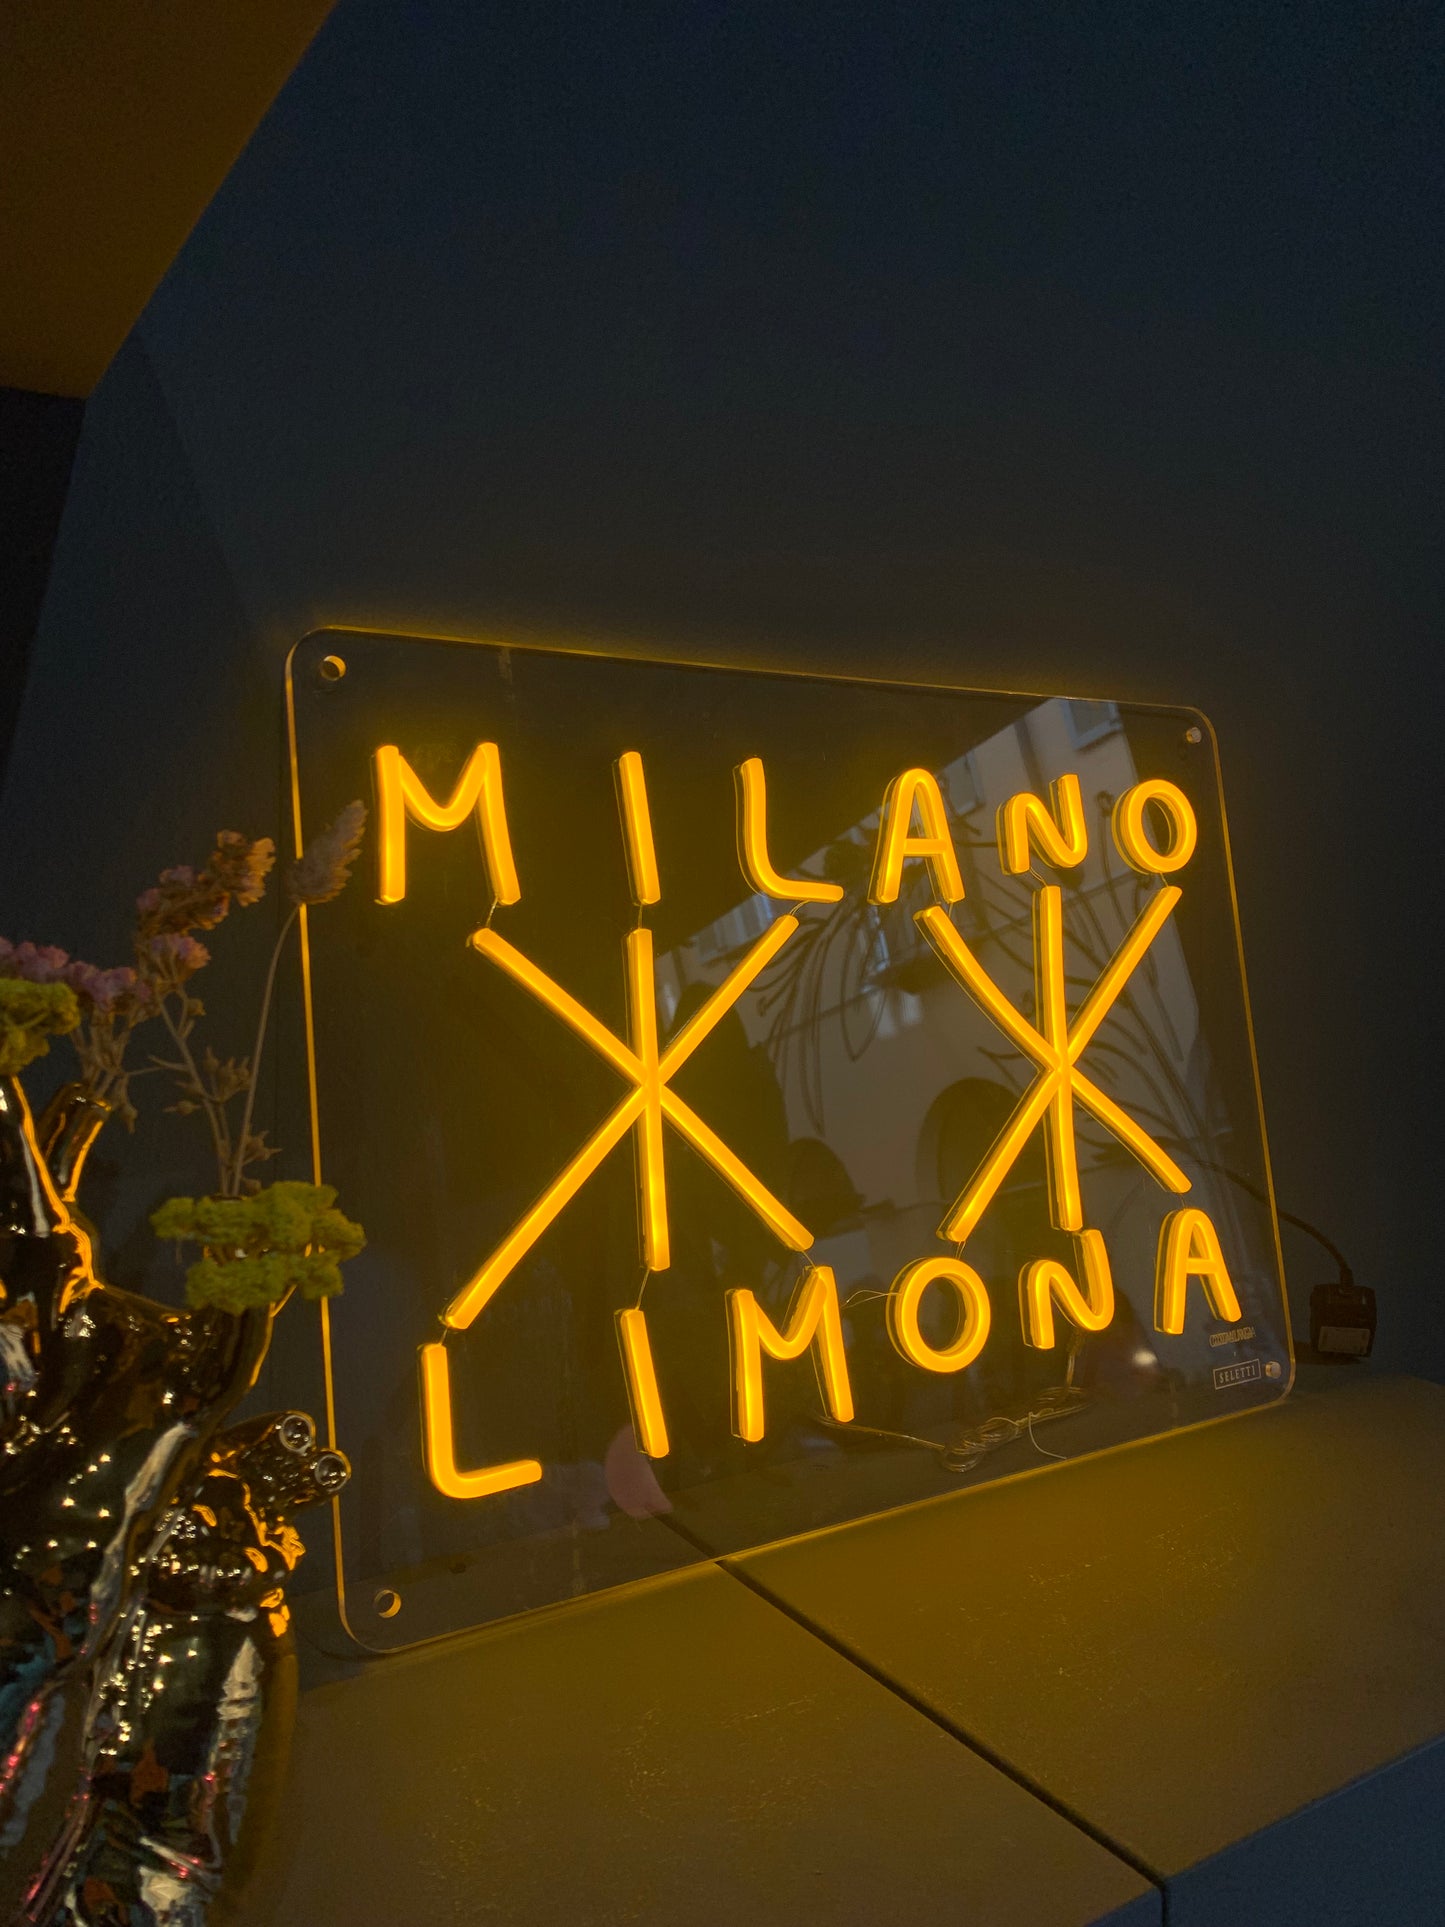 Led Milano Limona - Seletti